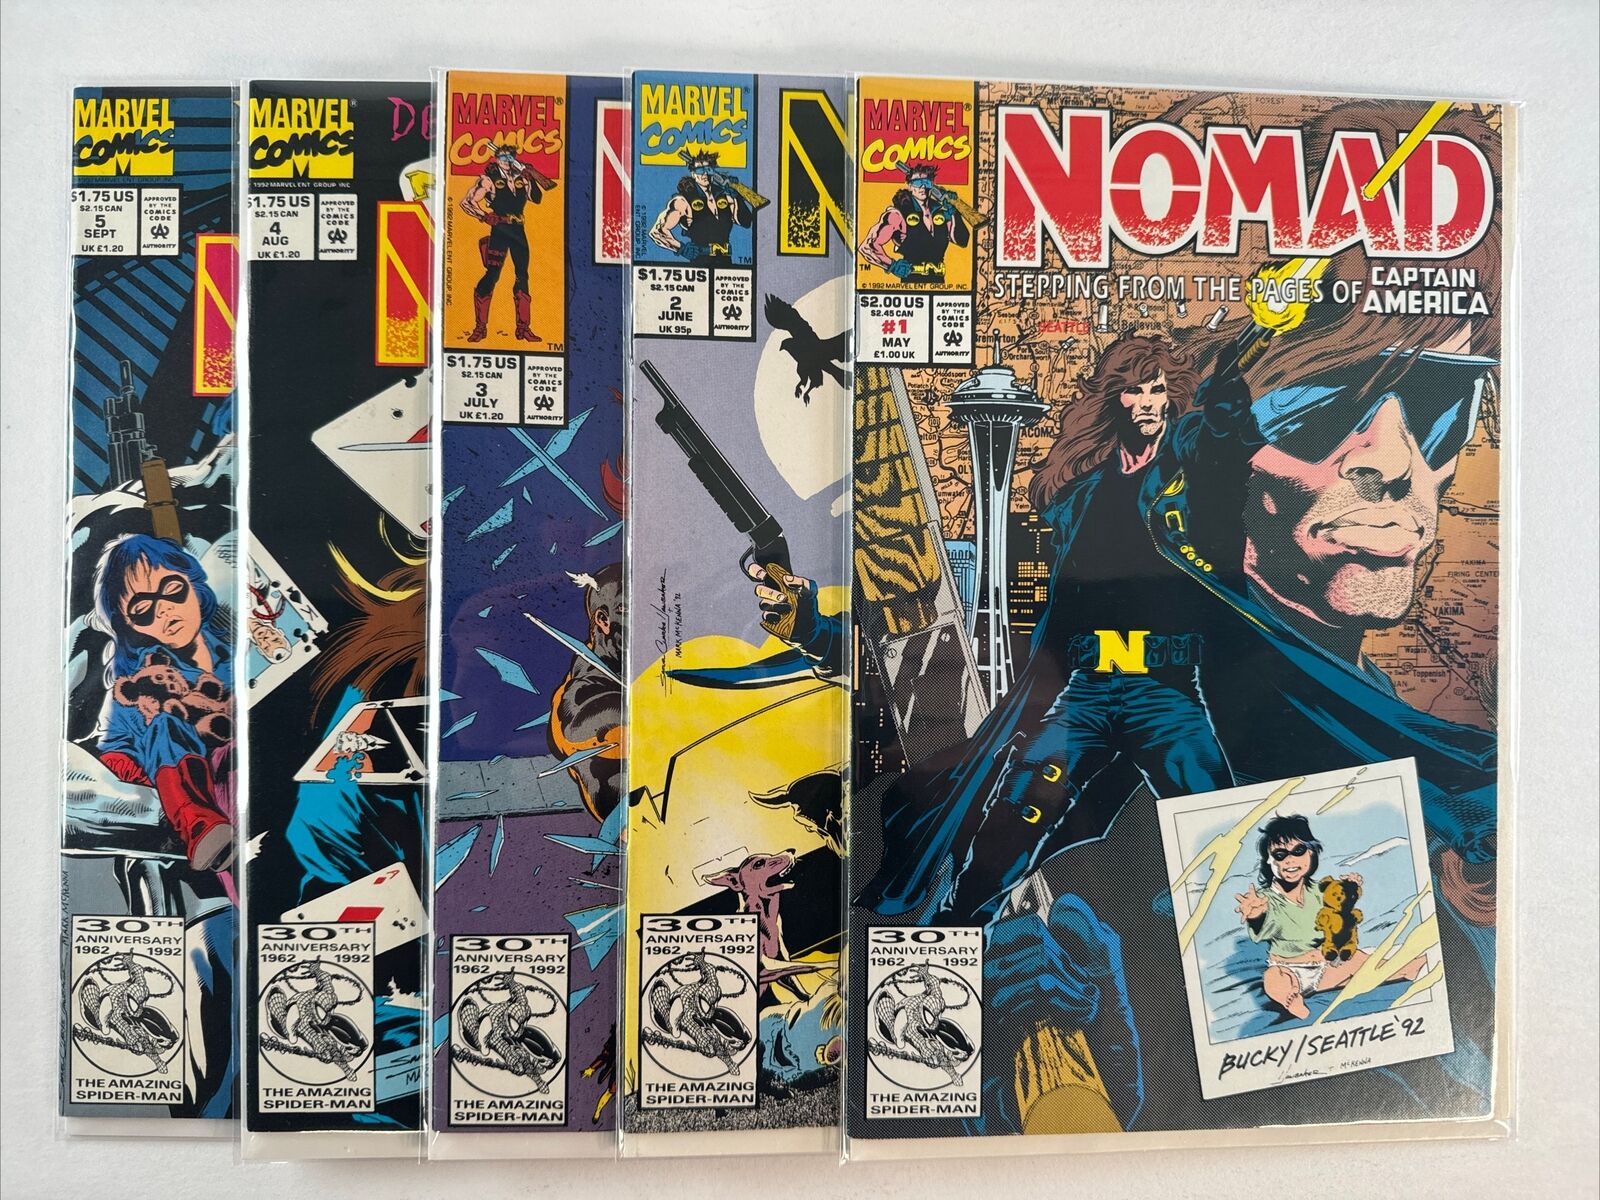 NOMAD issues 1-5. Marvel Comic Books. Captain America tie-in